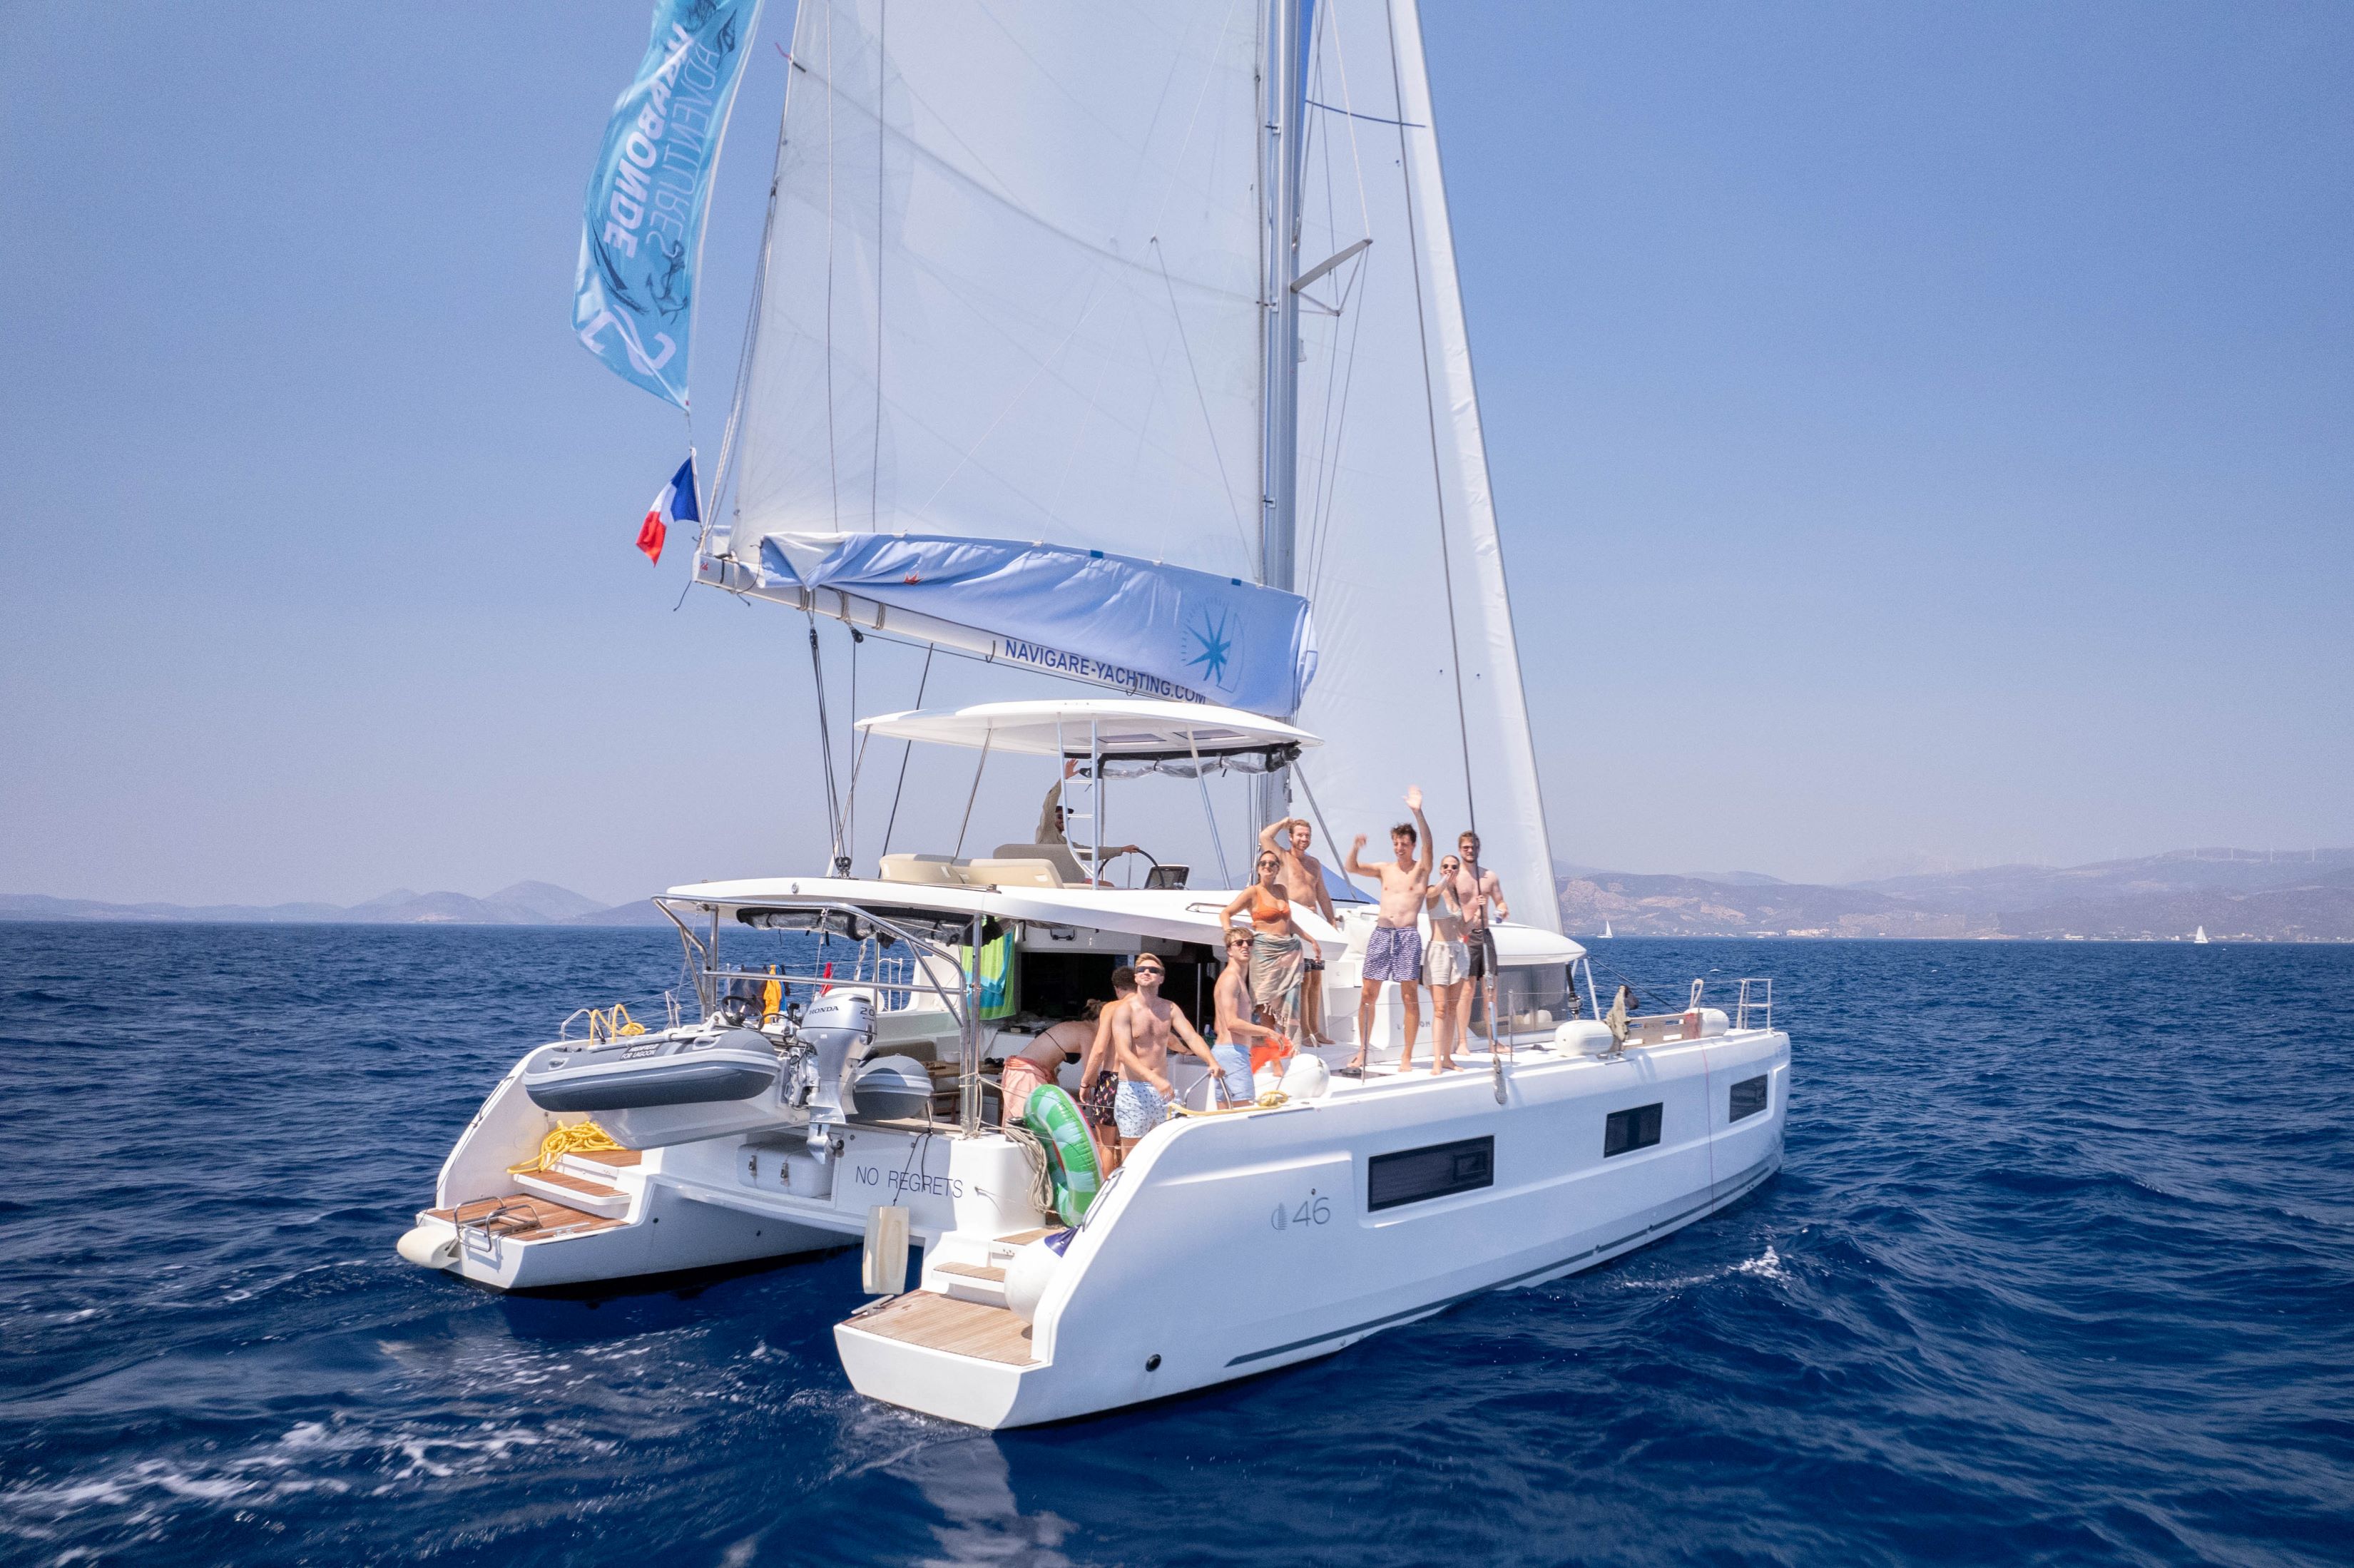 navigare-yachting-people-having-fun-on-a-catamaran.jpg